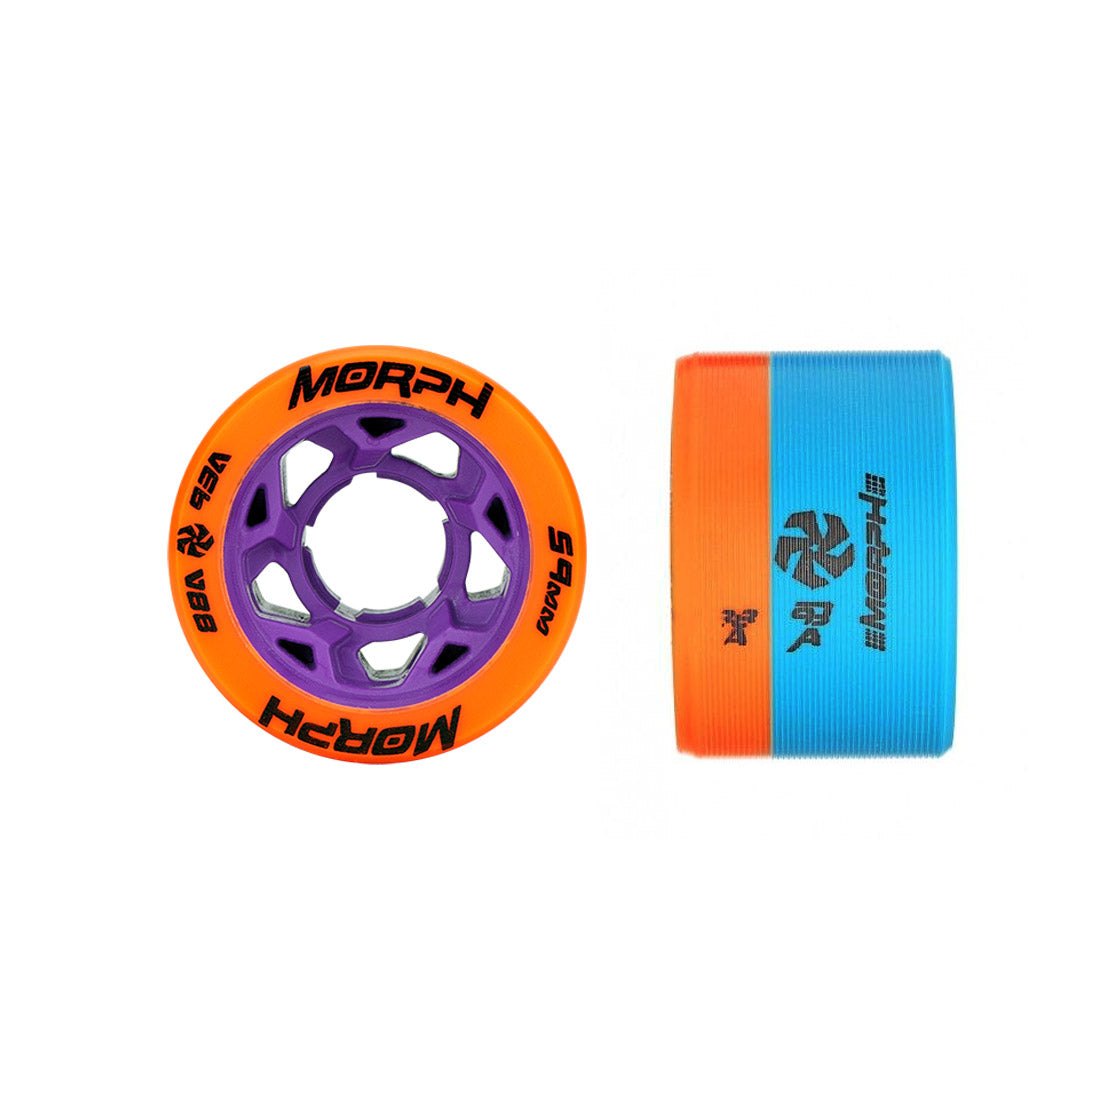 Reckless Morph Dual 59mm Wheels 4pk 88a/93a | Orange/Blue Roller Skate Wheels